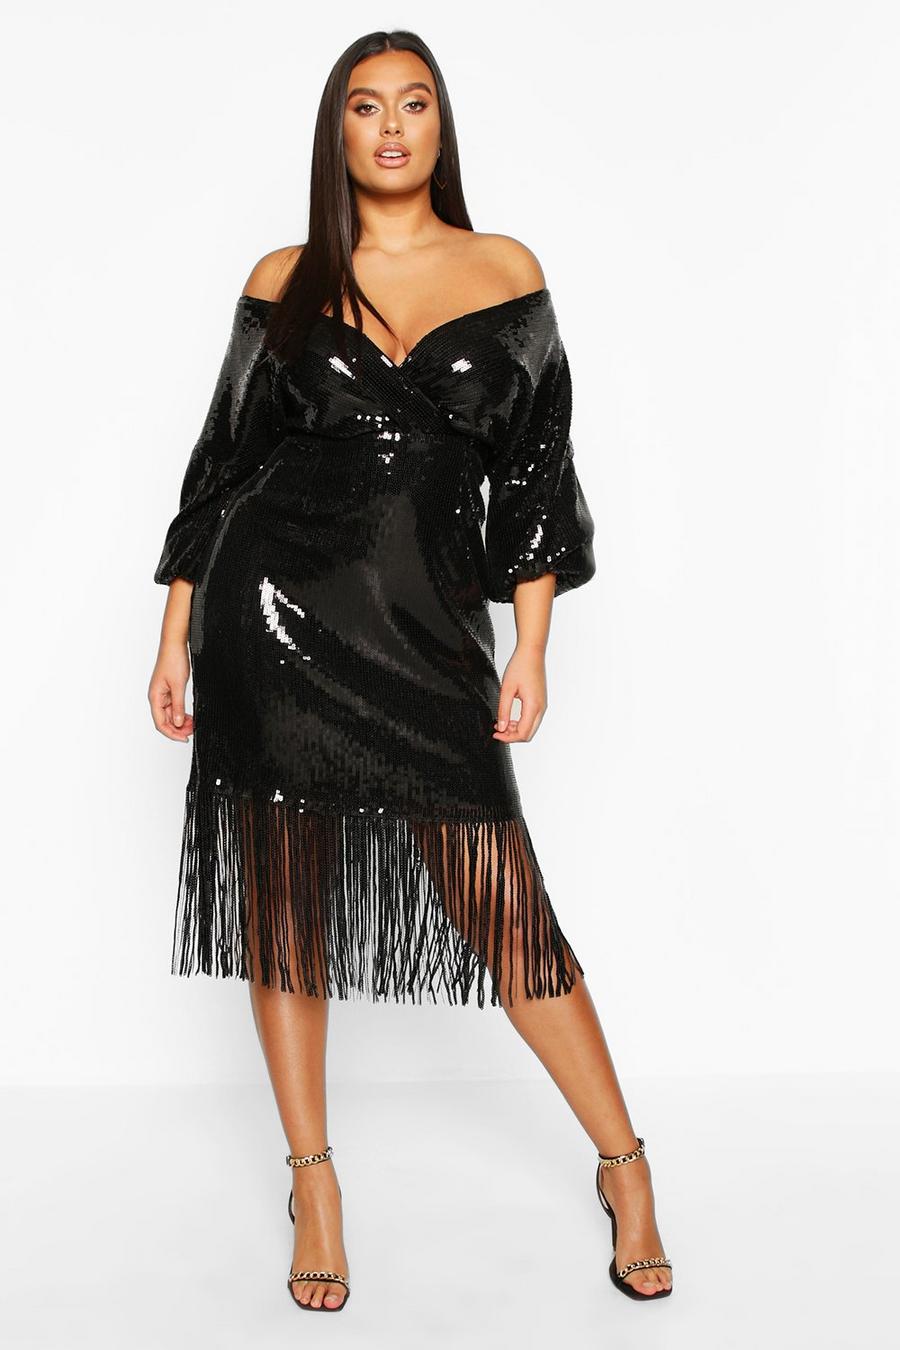 Sexy SWAK Designs Black Plus Size Bonnie Maxi Dress, Party Glamorous 